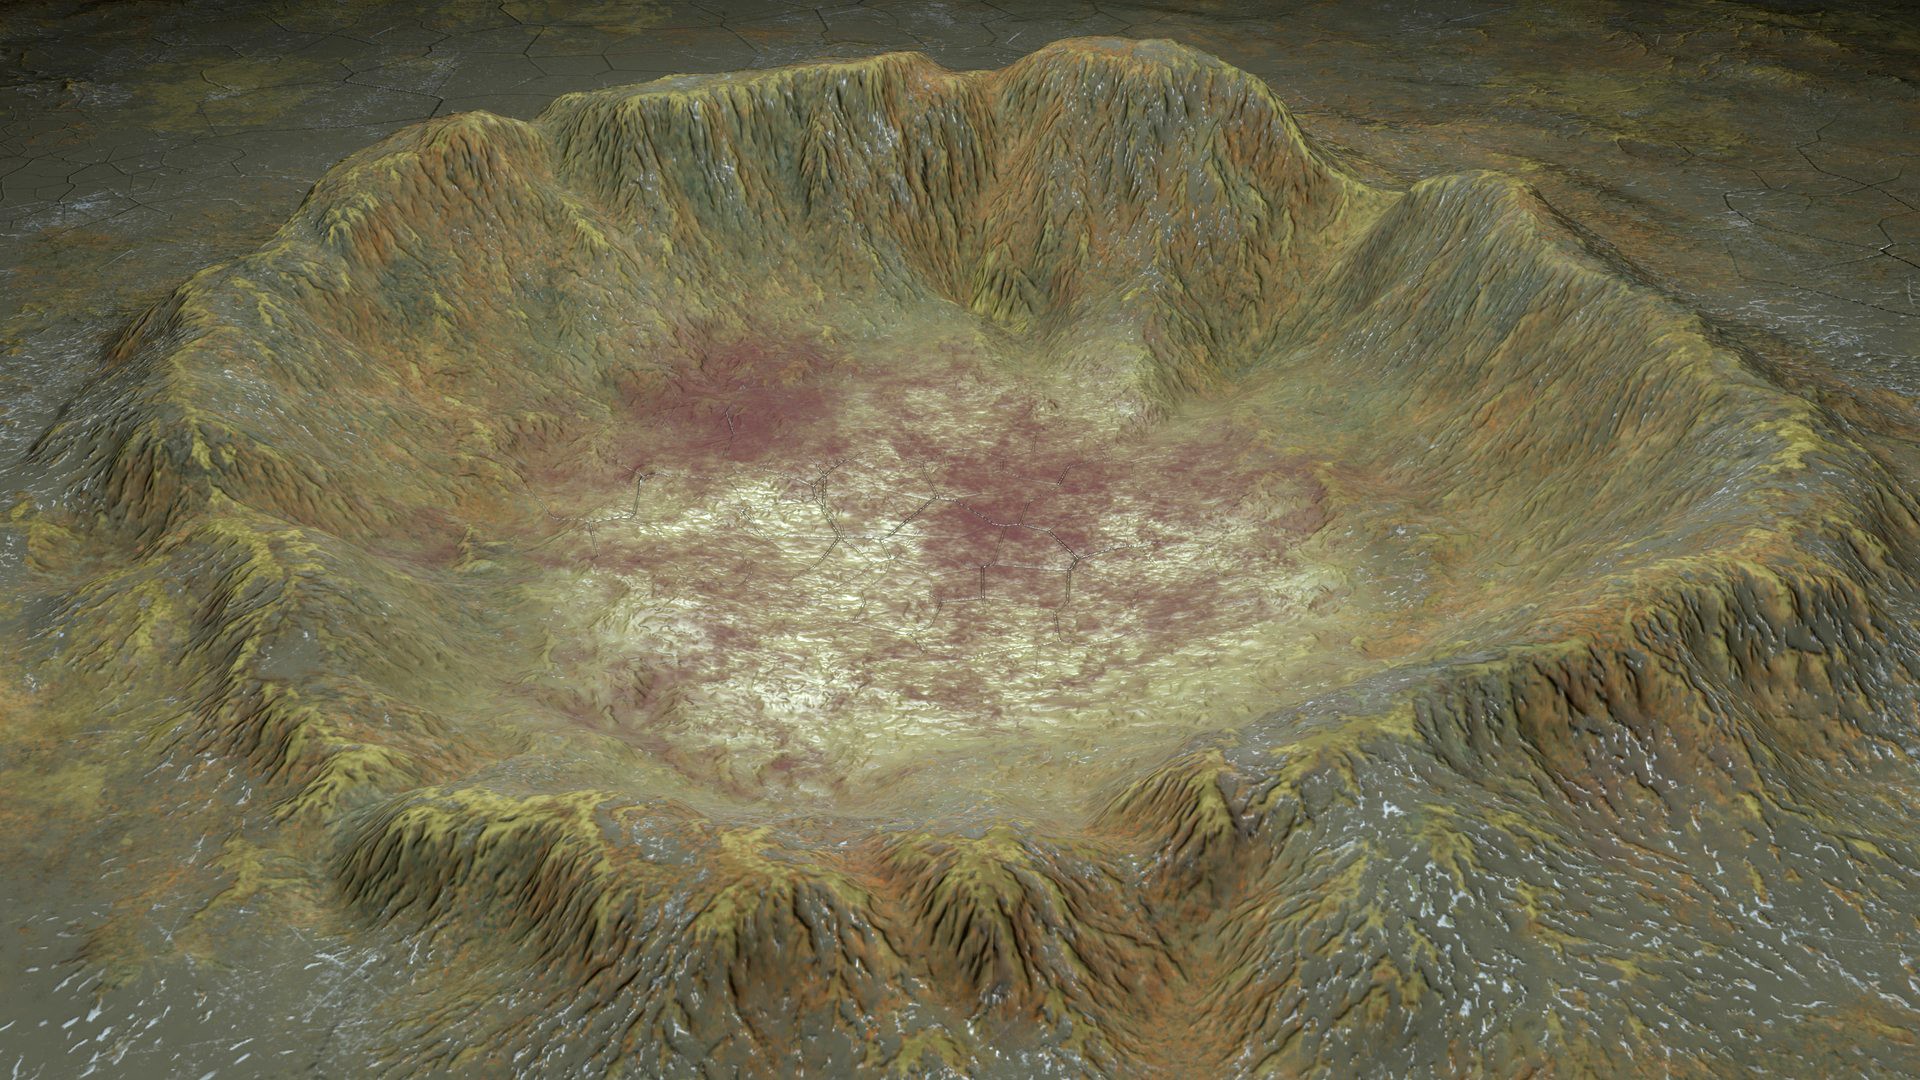 Crater 4